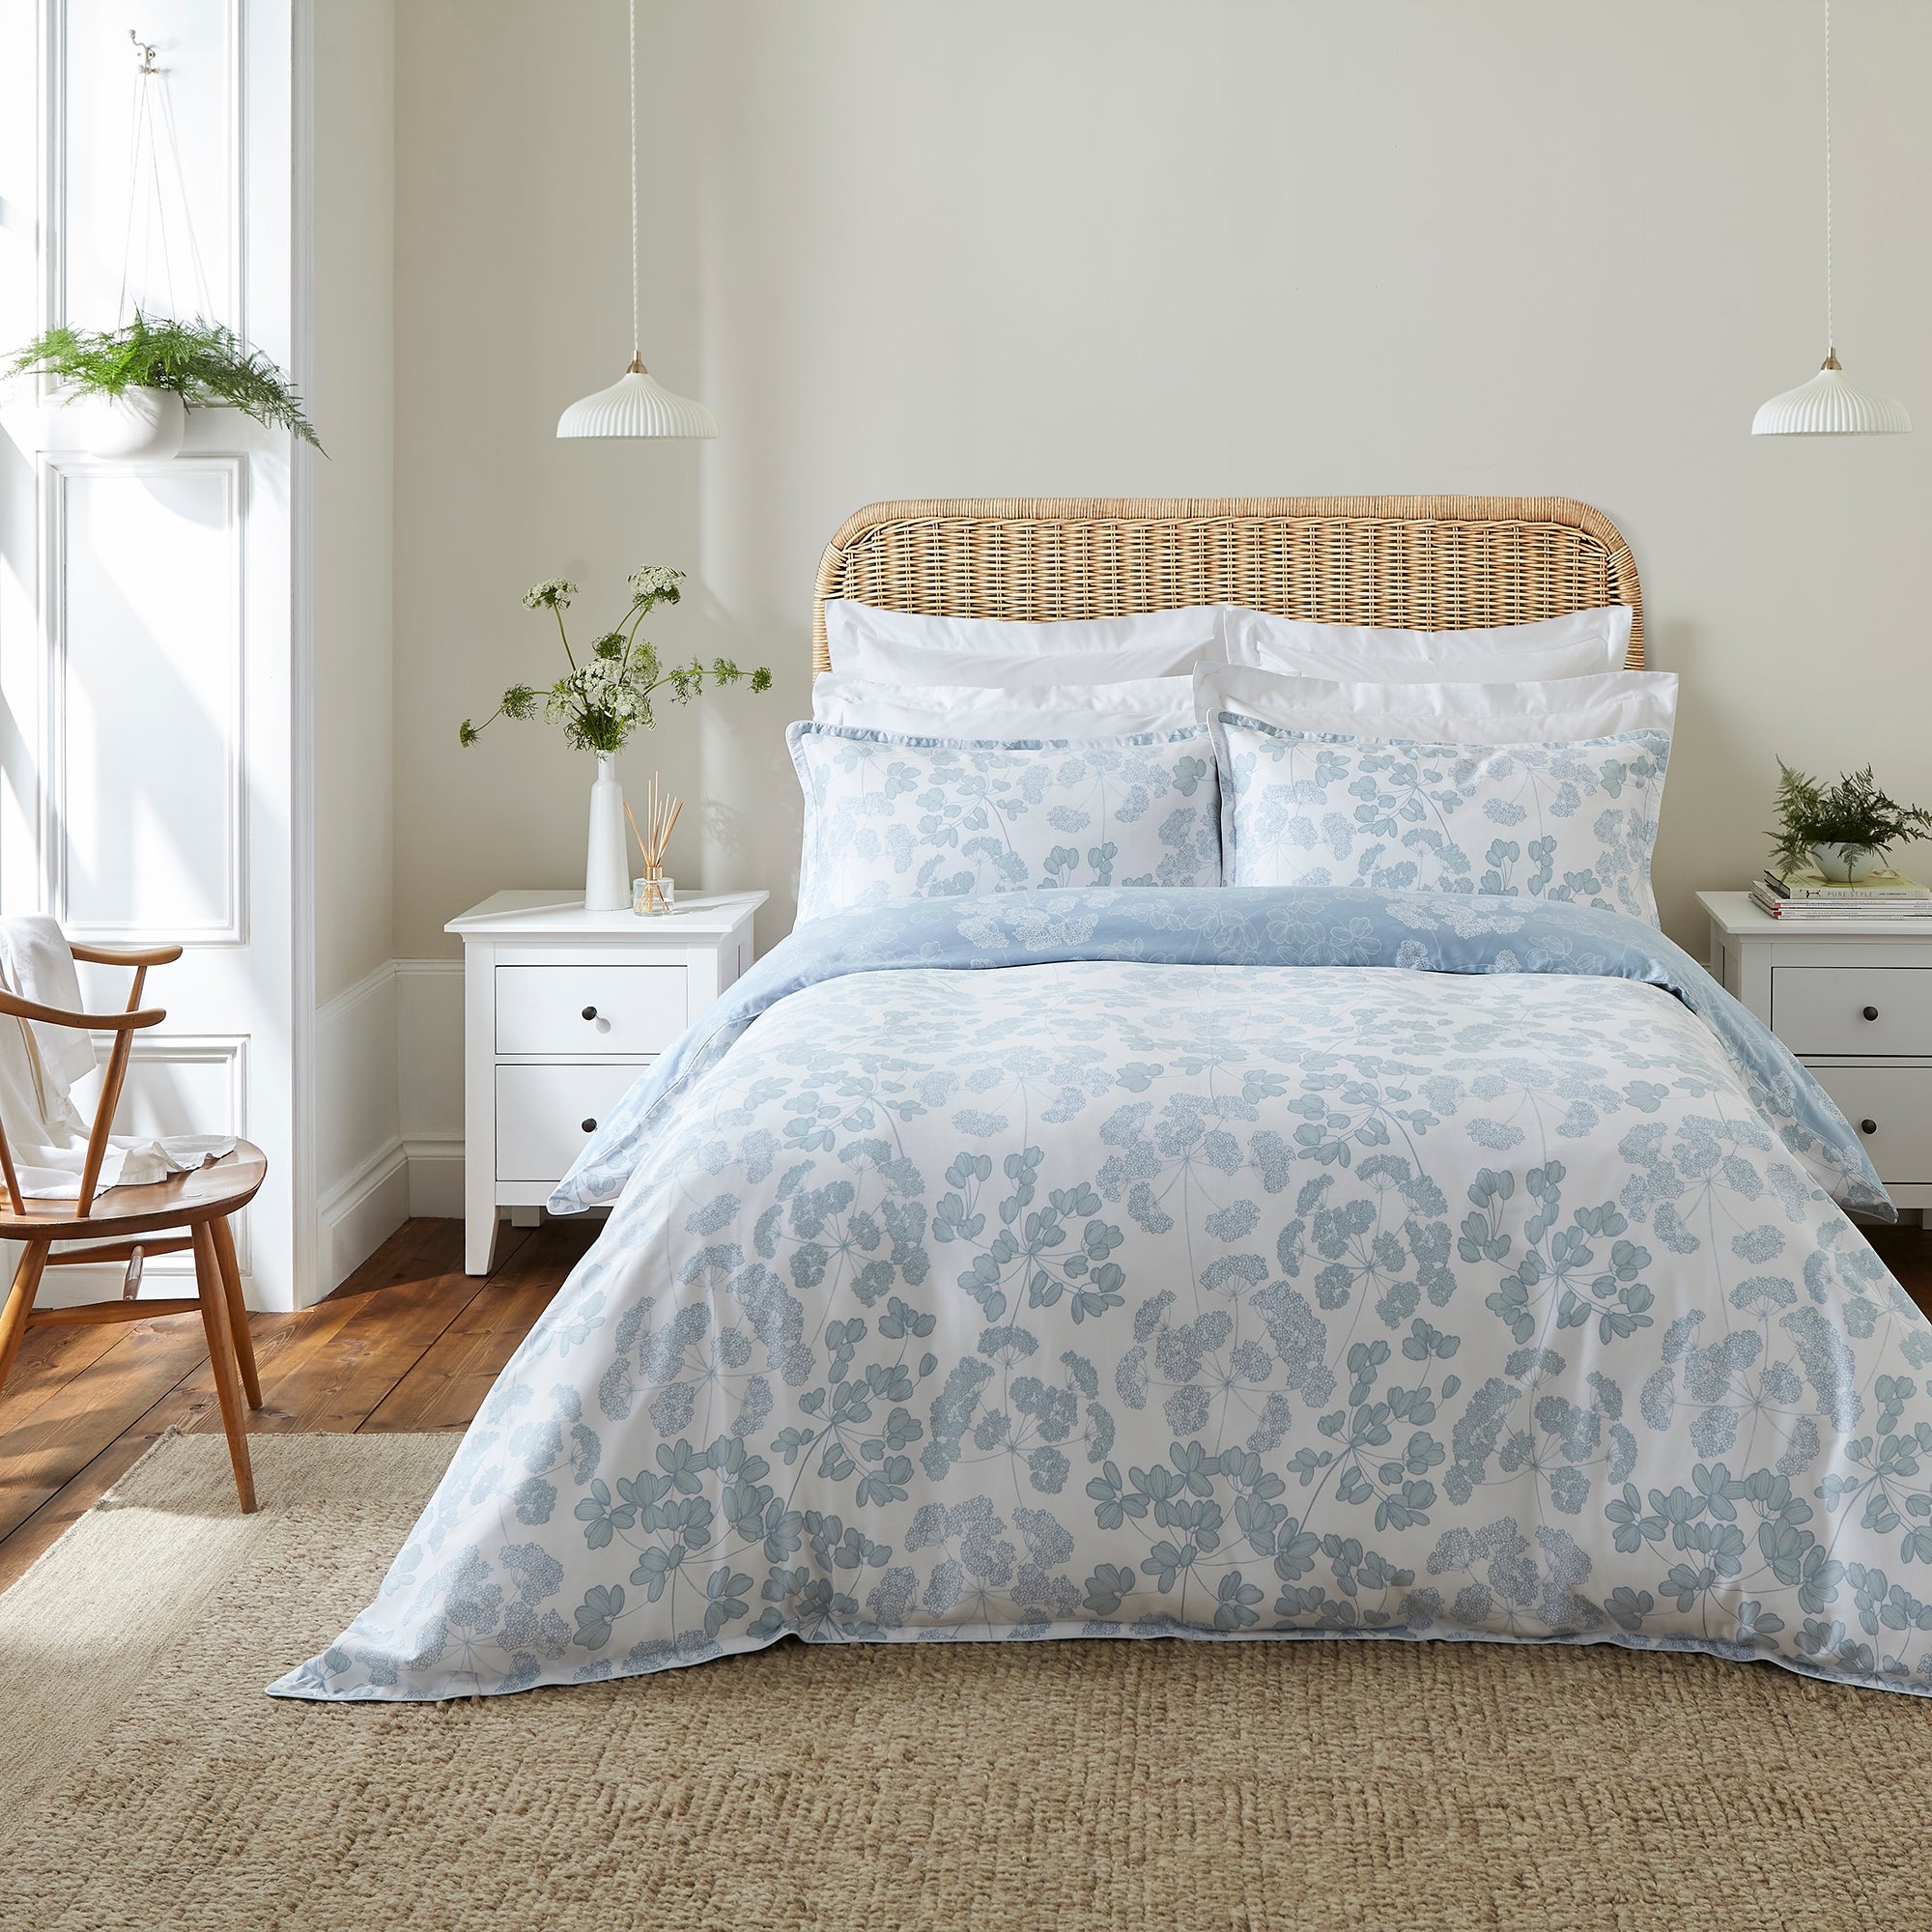 Dorma Daylesford Blue 100% Cotton Duvet Cover and Pillowcase Set Light Blue